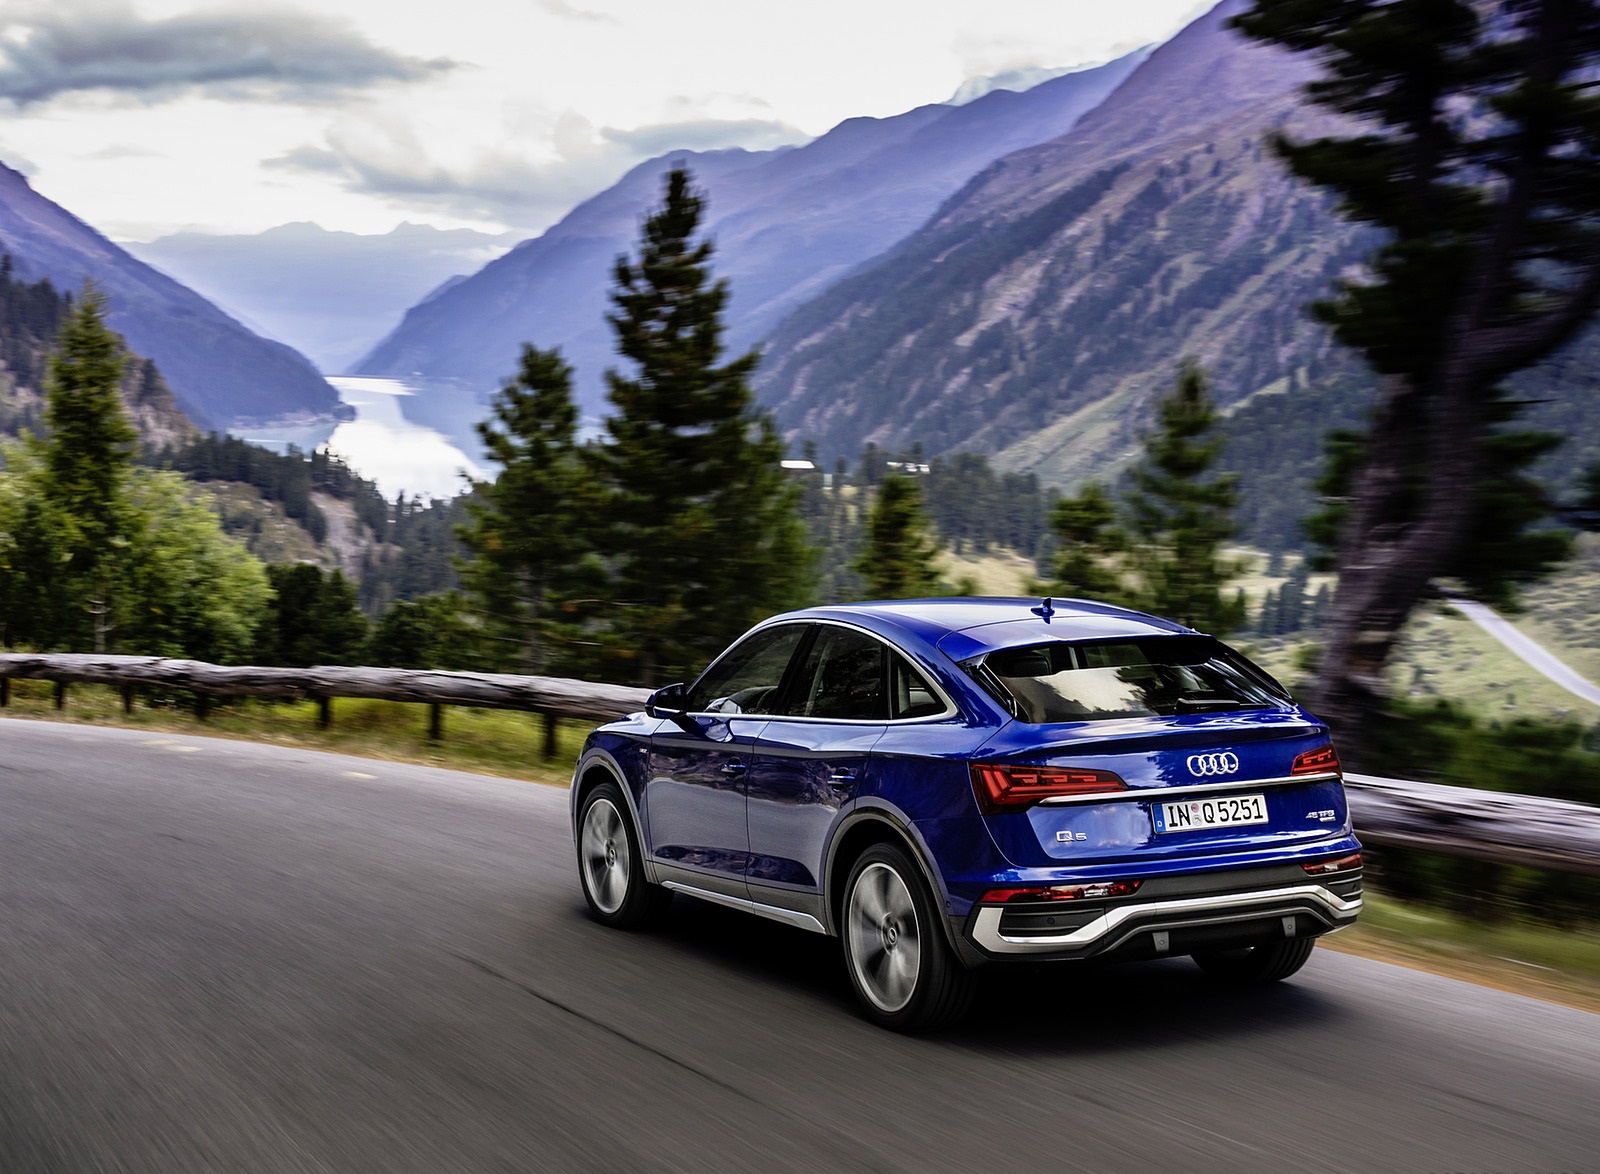 2021 Audi Q5 Sportback (Color: Ultra Blue) Rear Three-Quarter Wallpapers  #70 of 158